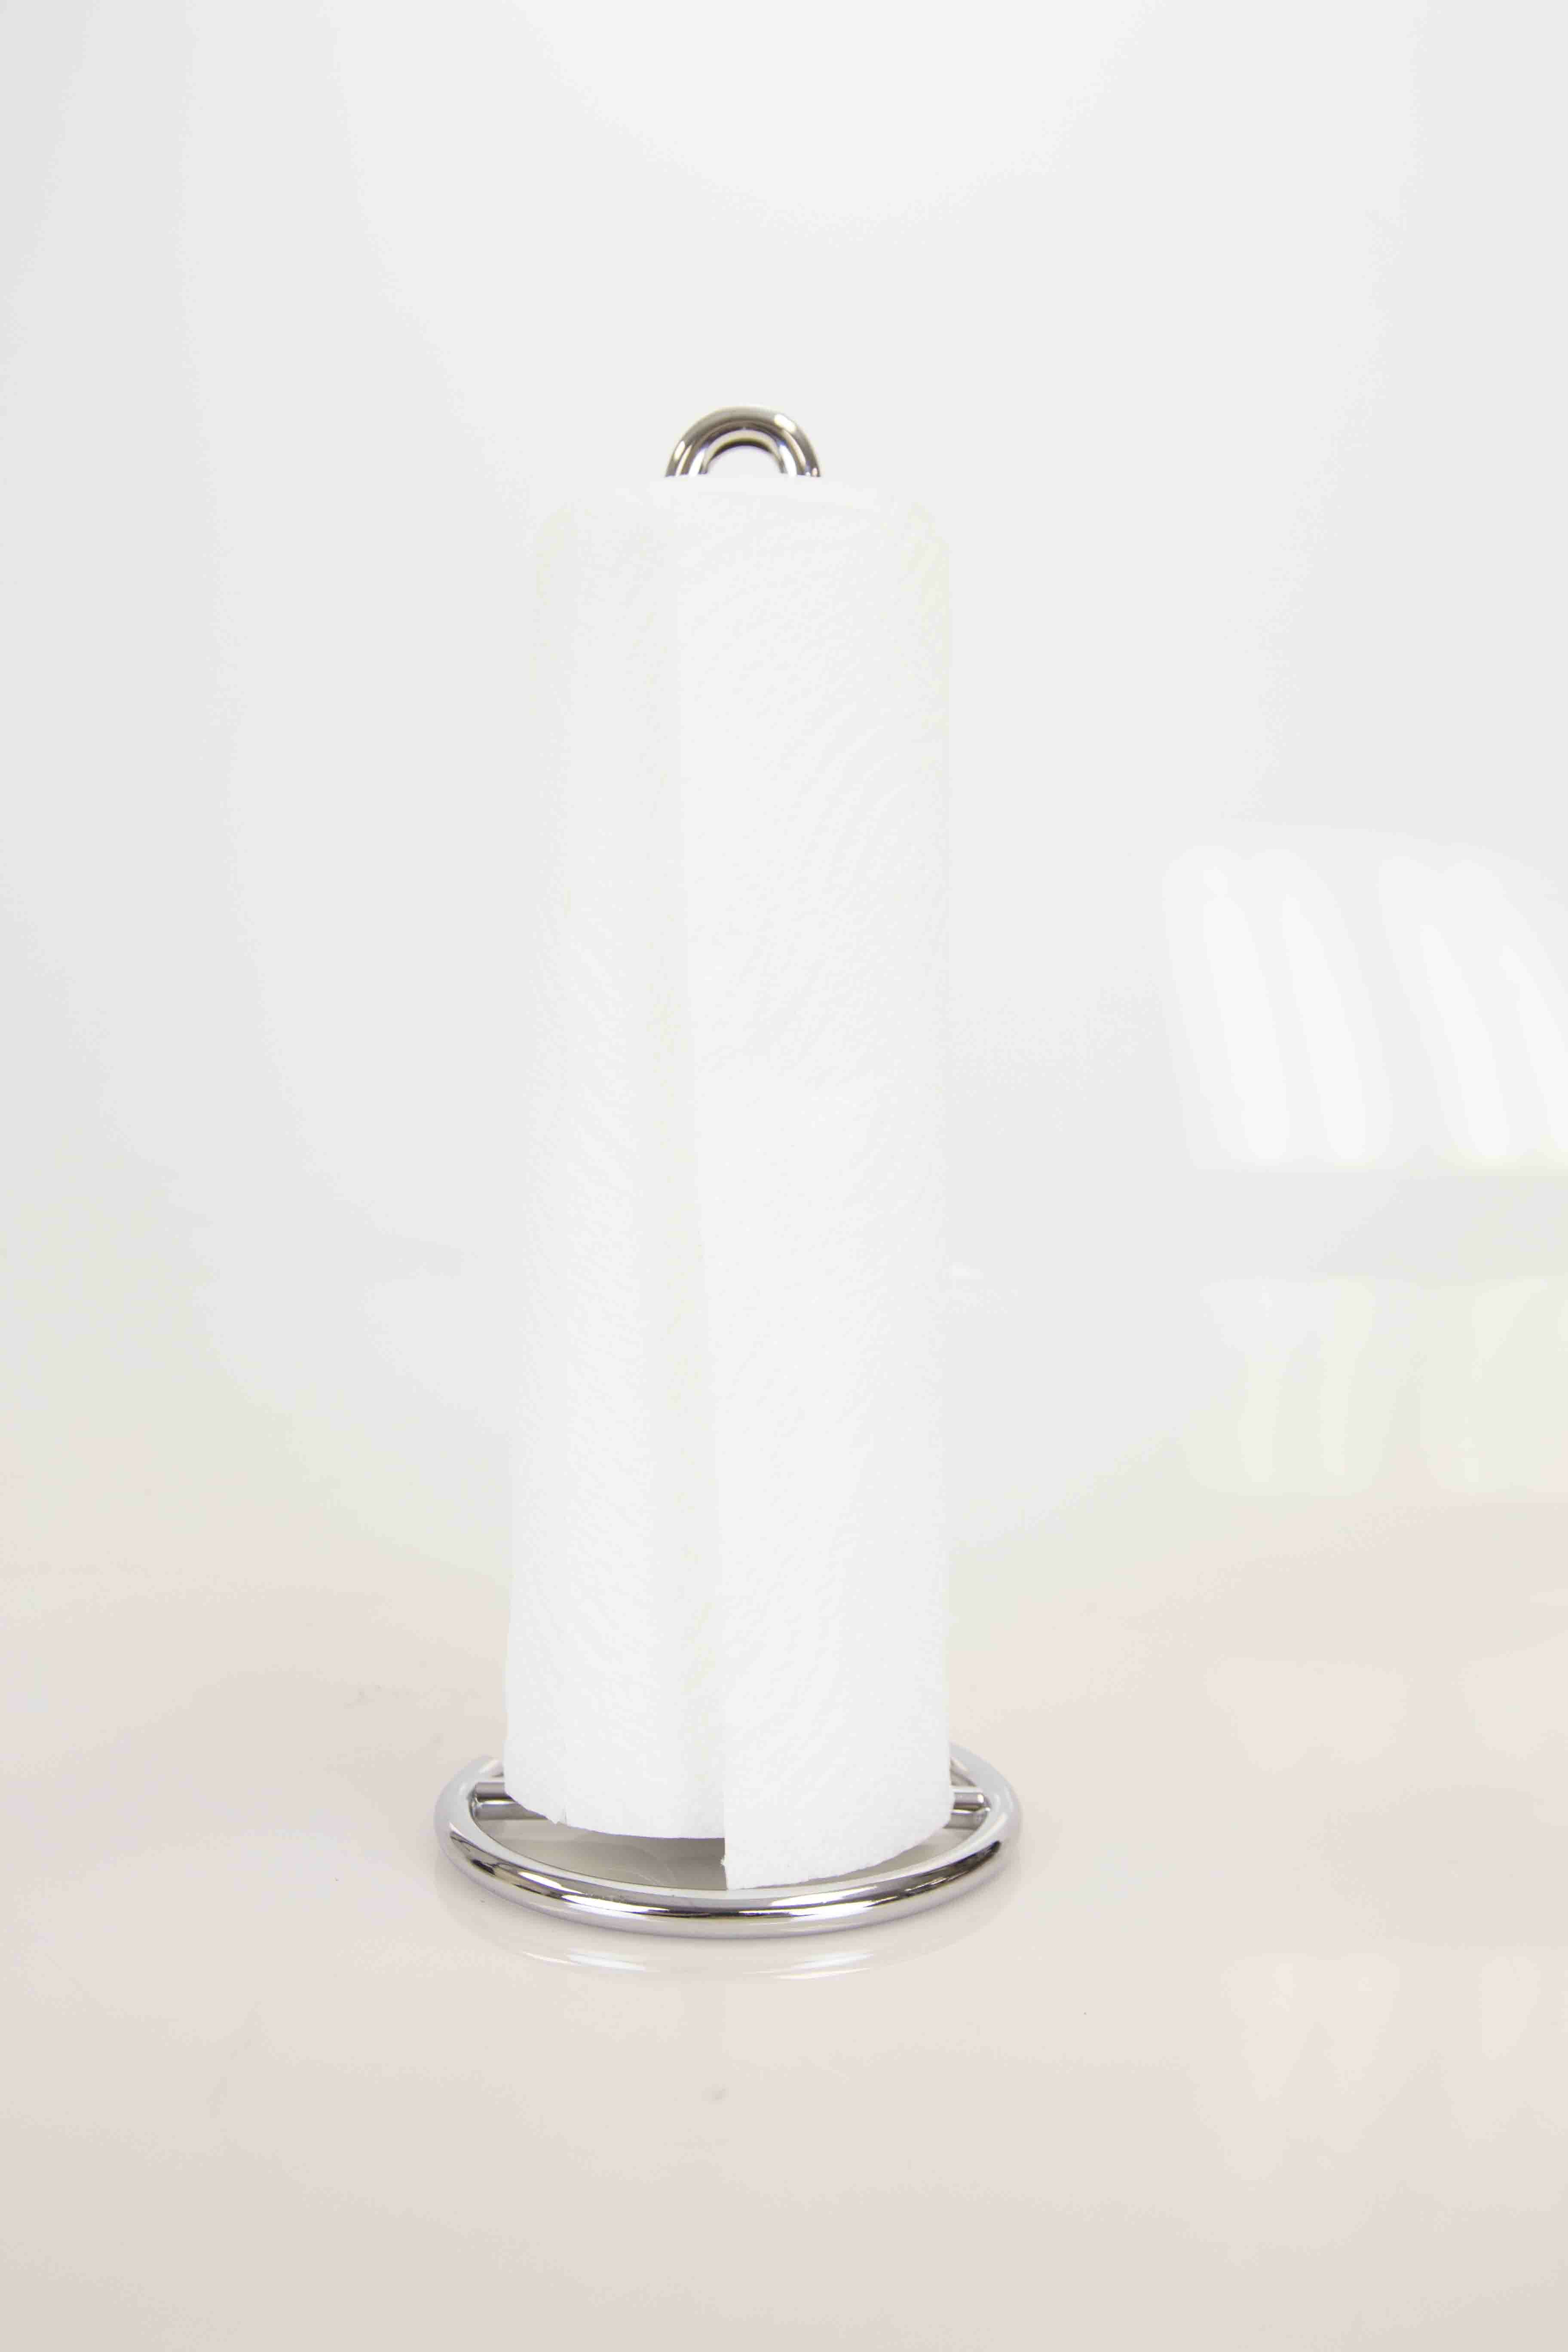 Standing Paper Towel Holder Countertop Toilet Paper Holder Kitchen Towel Holder Stand up with Sturdy No-Slip Base Modern Simplicity Design